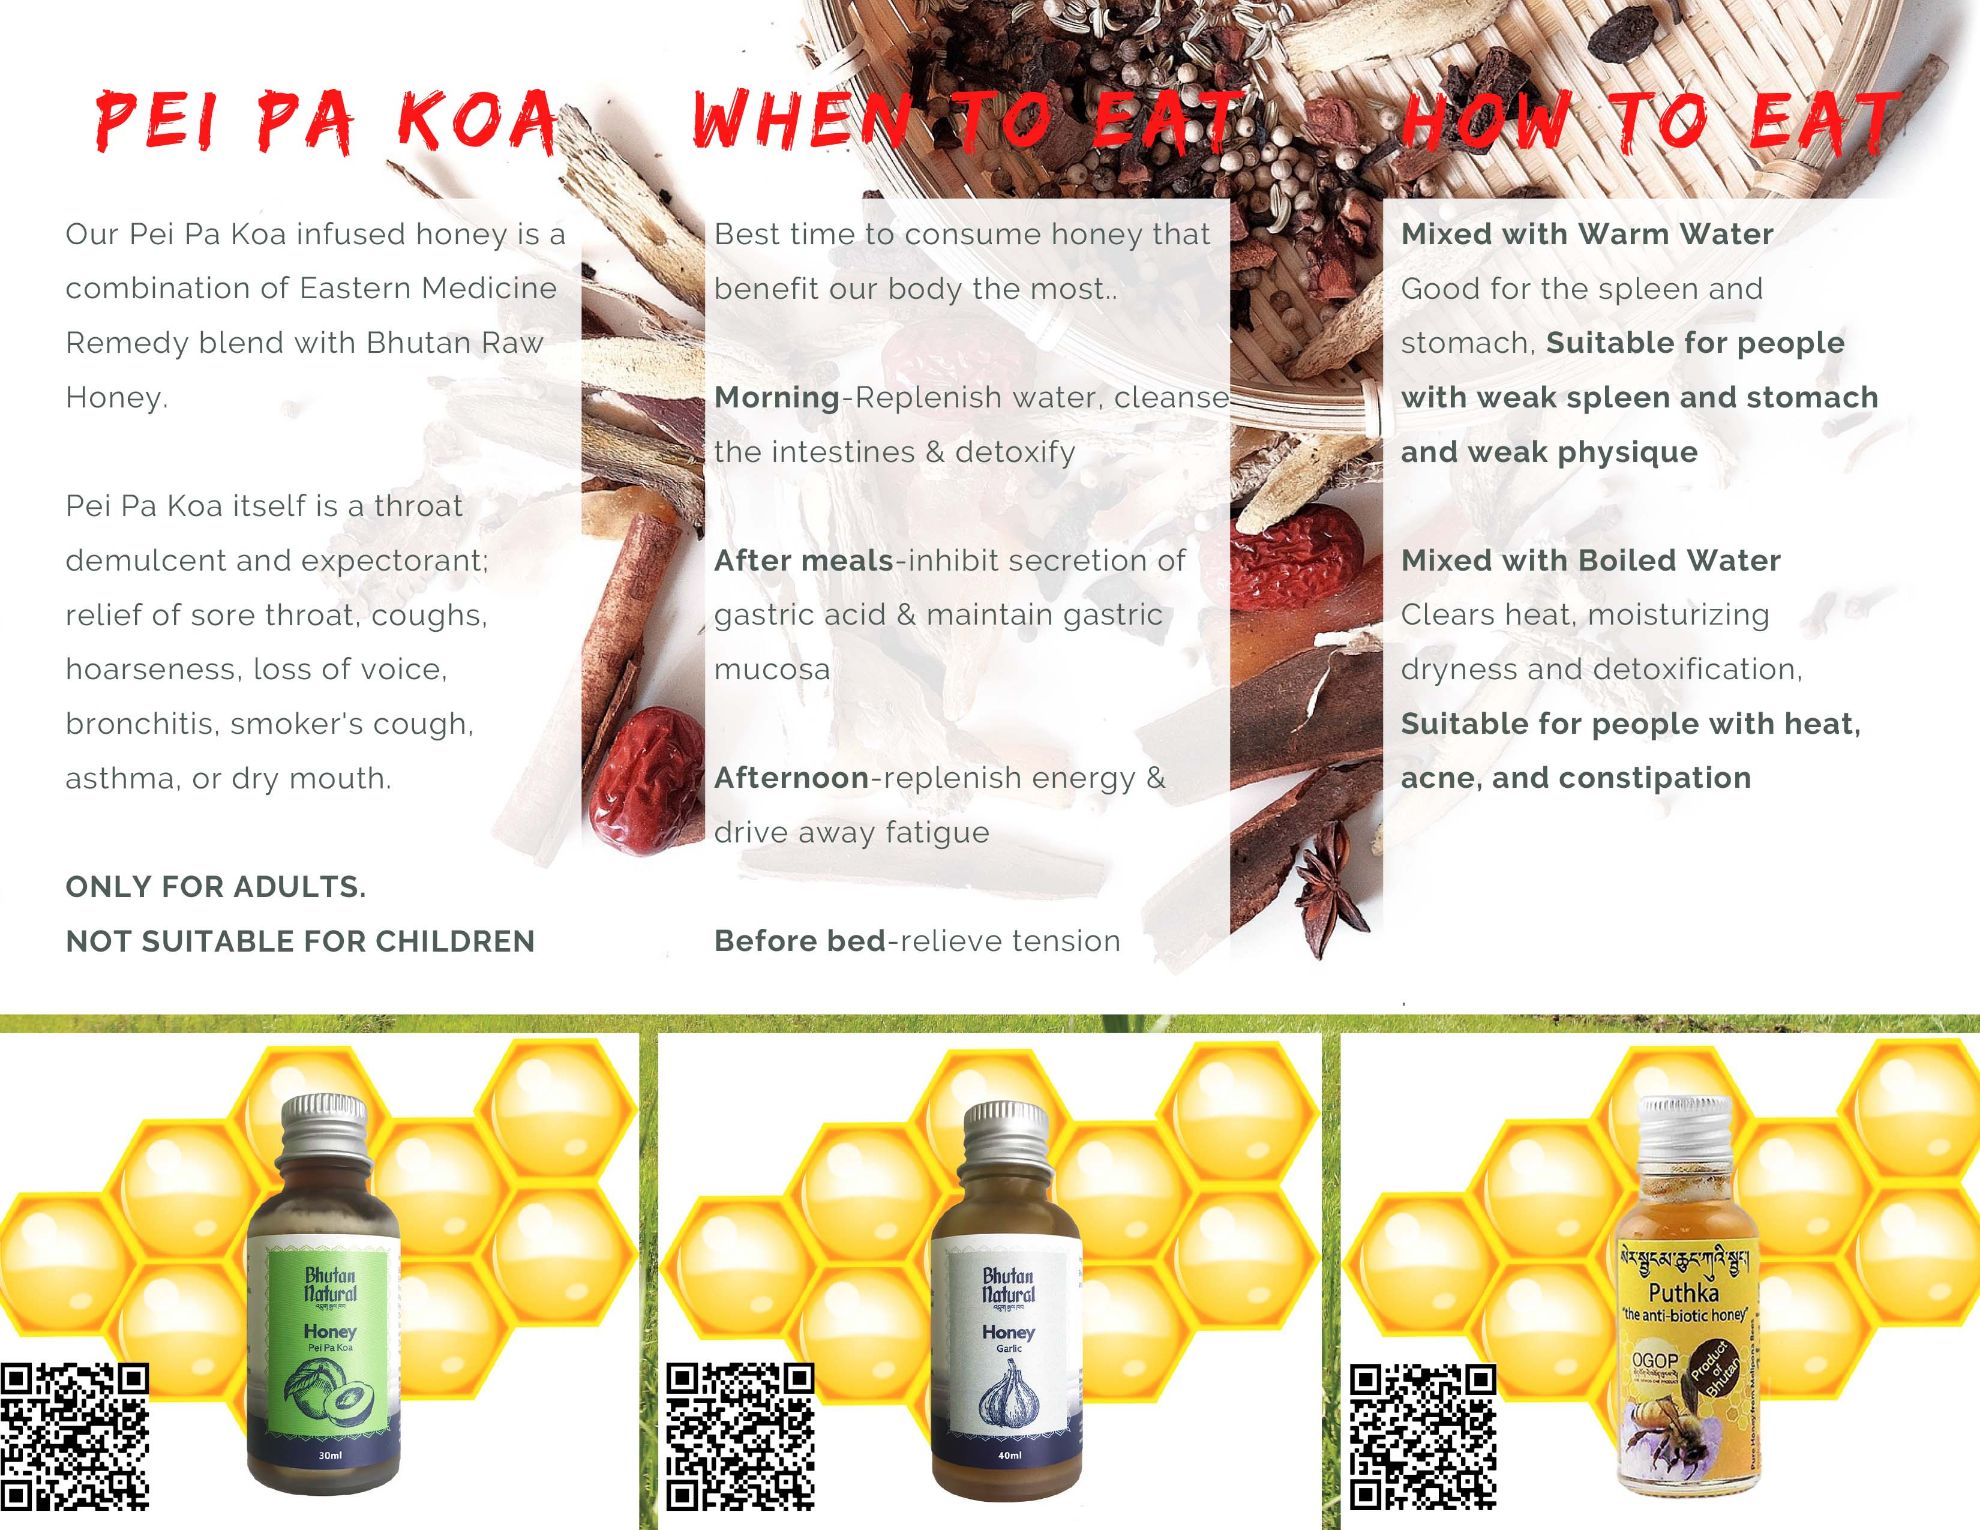 Picture of Pei Pa Koa Infused Honey